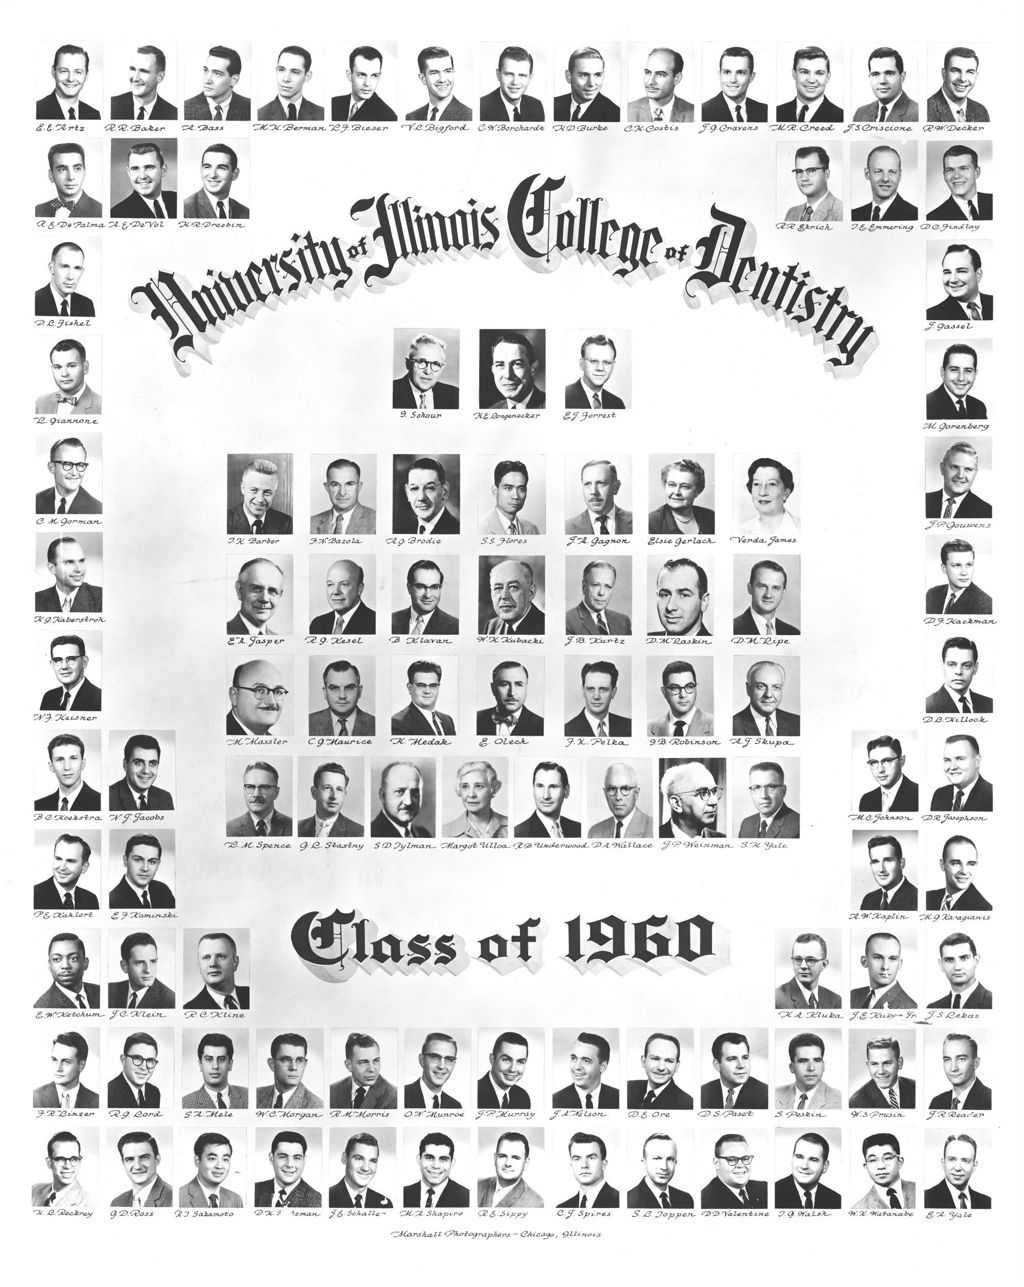 1960 graduating class, University of Illinois College of Dentistry